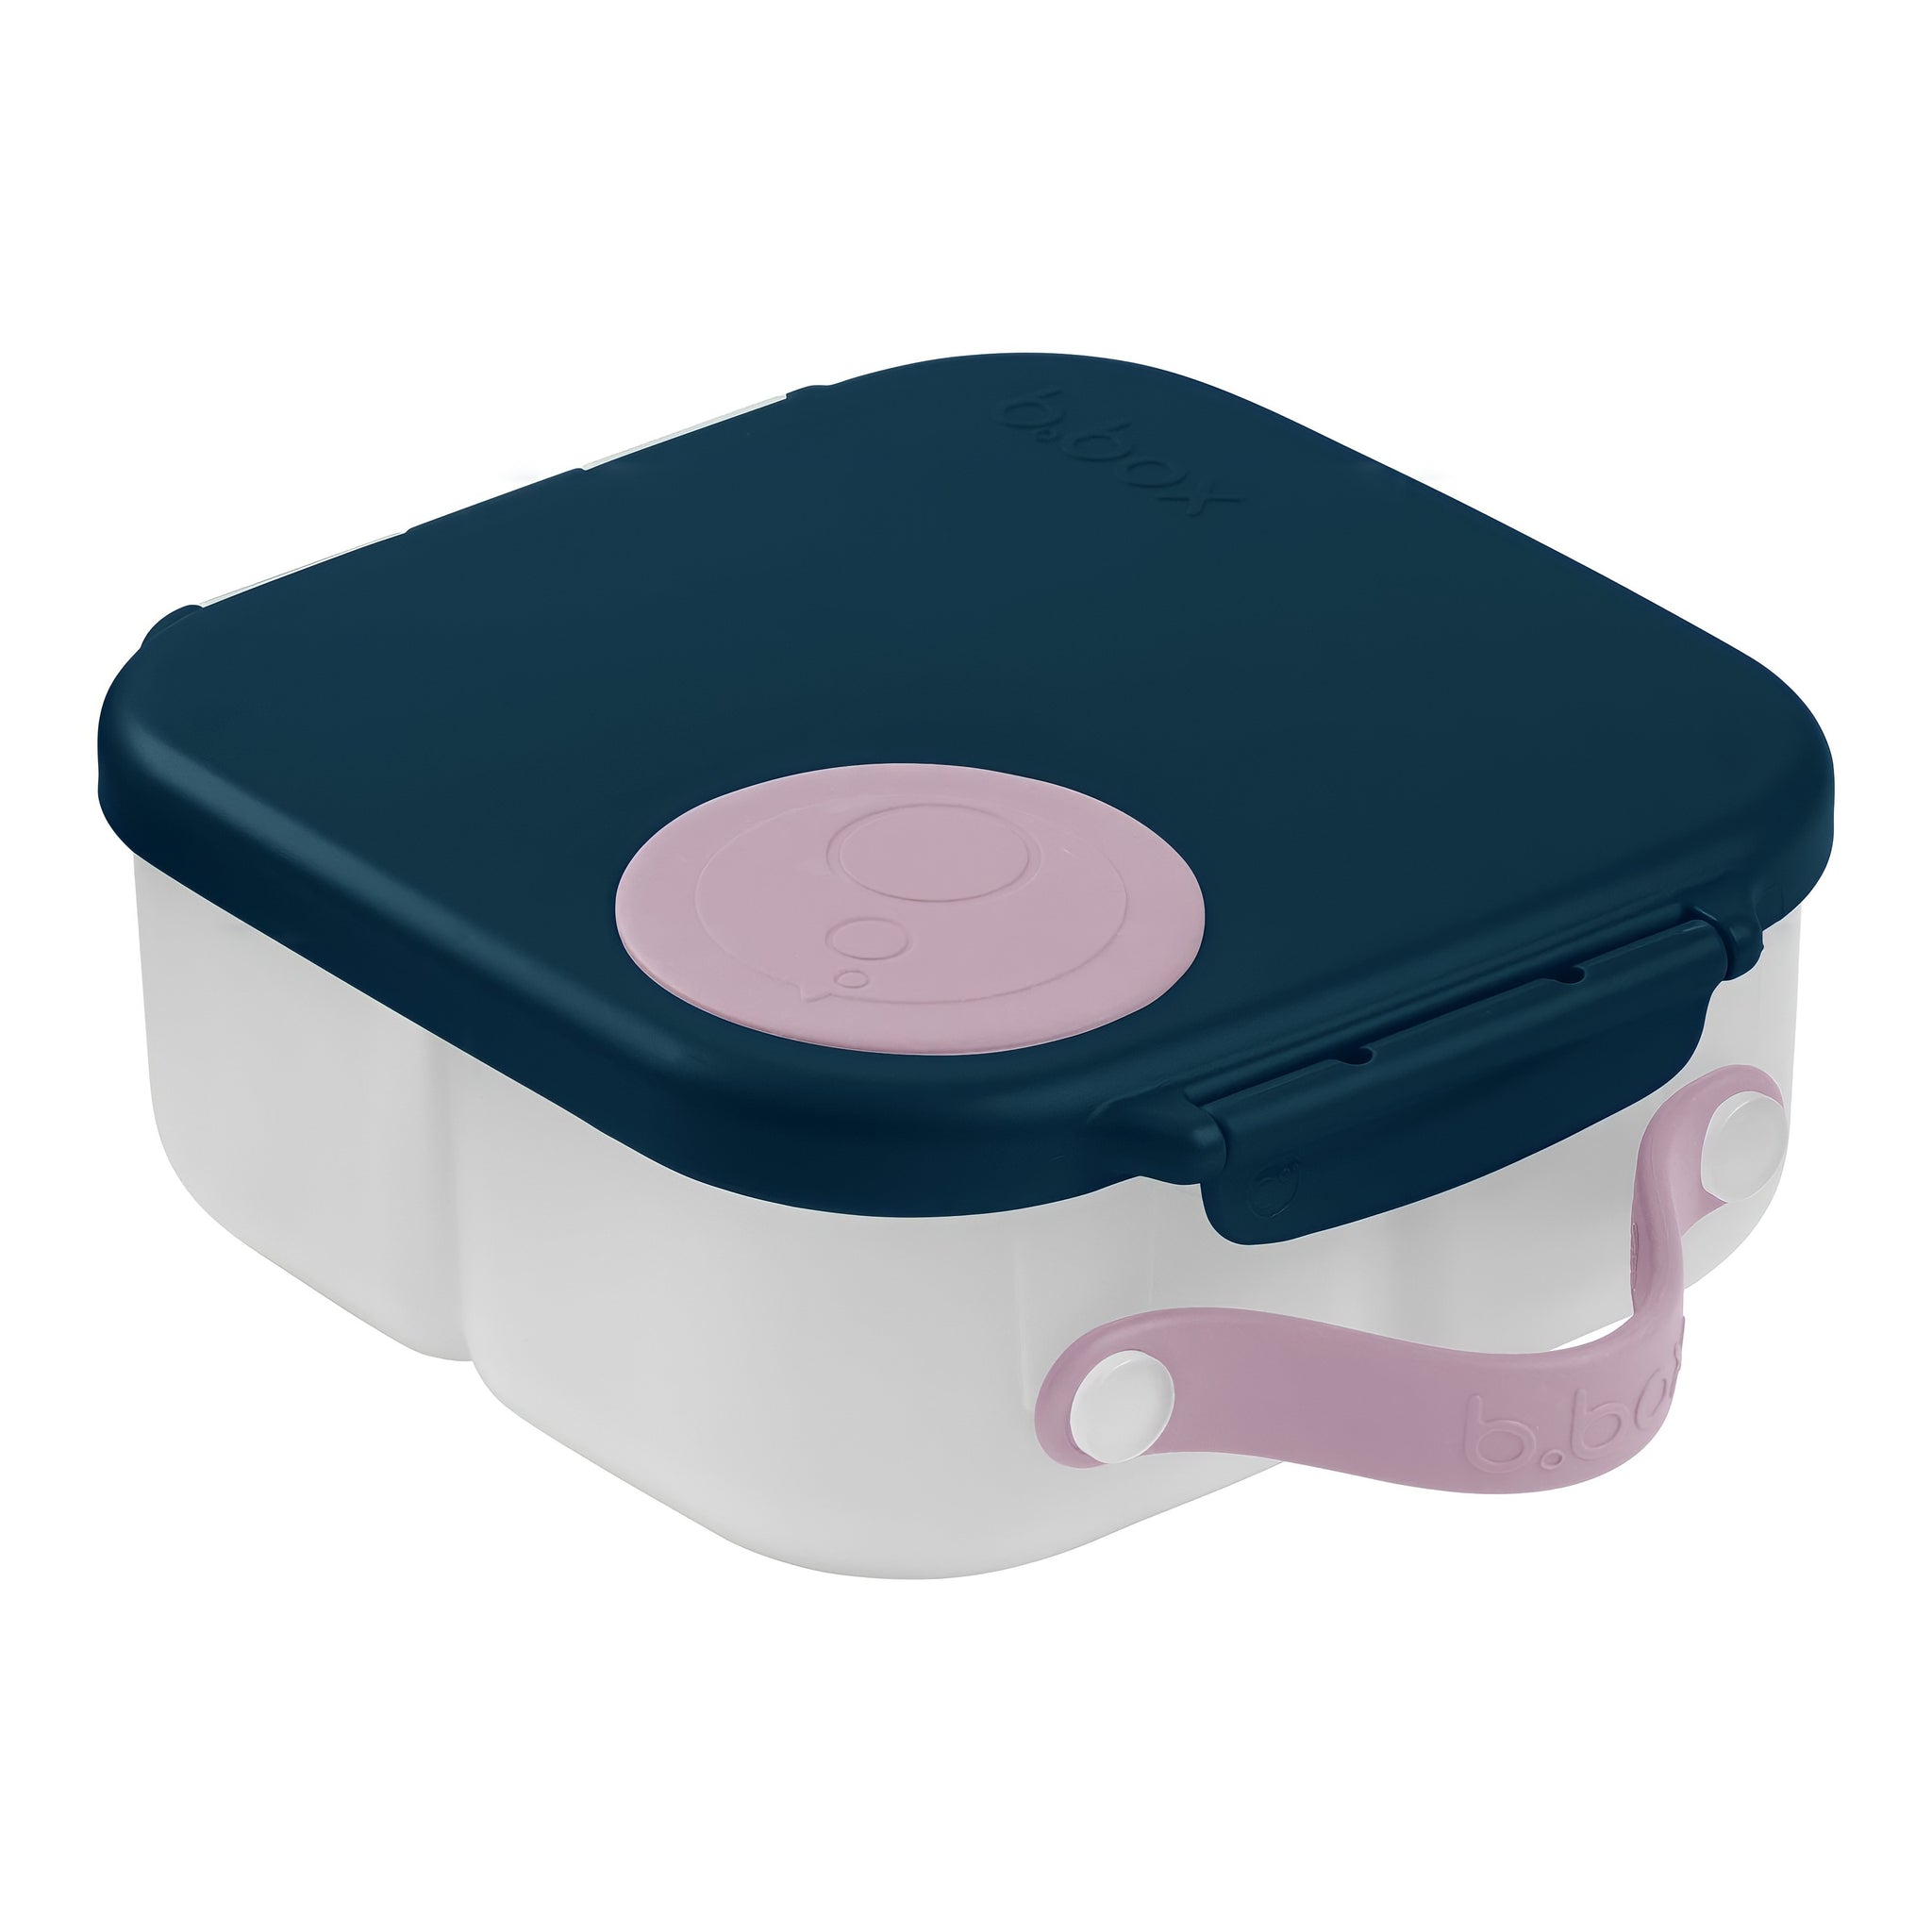 b.box Mini Lunchbox | Indigo Rose